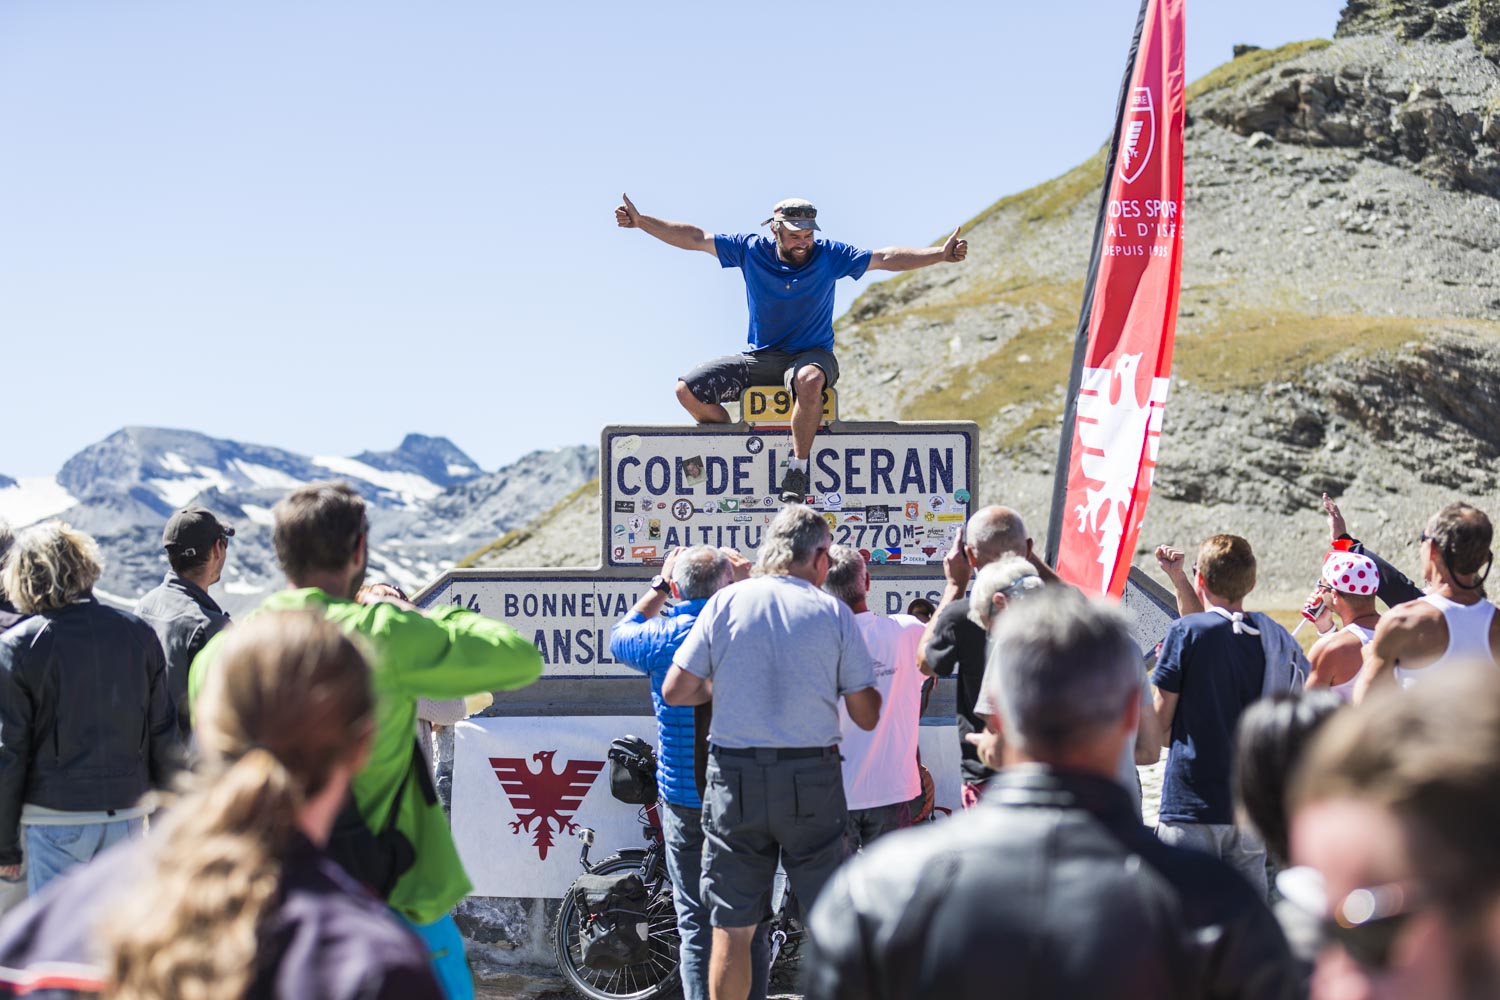 Stéphane Amann - Bouli - World Bicycle Tour - Col de l'Iseran - Val d'Isère